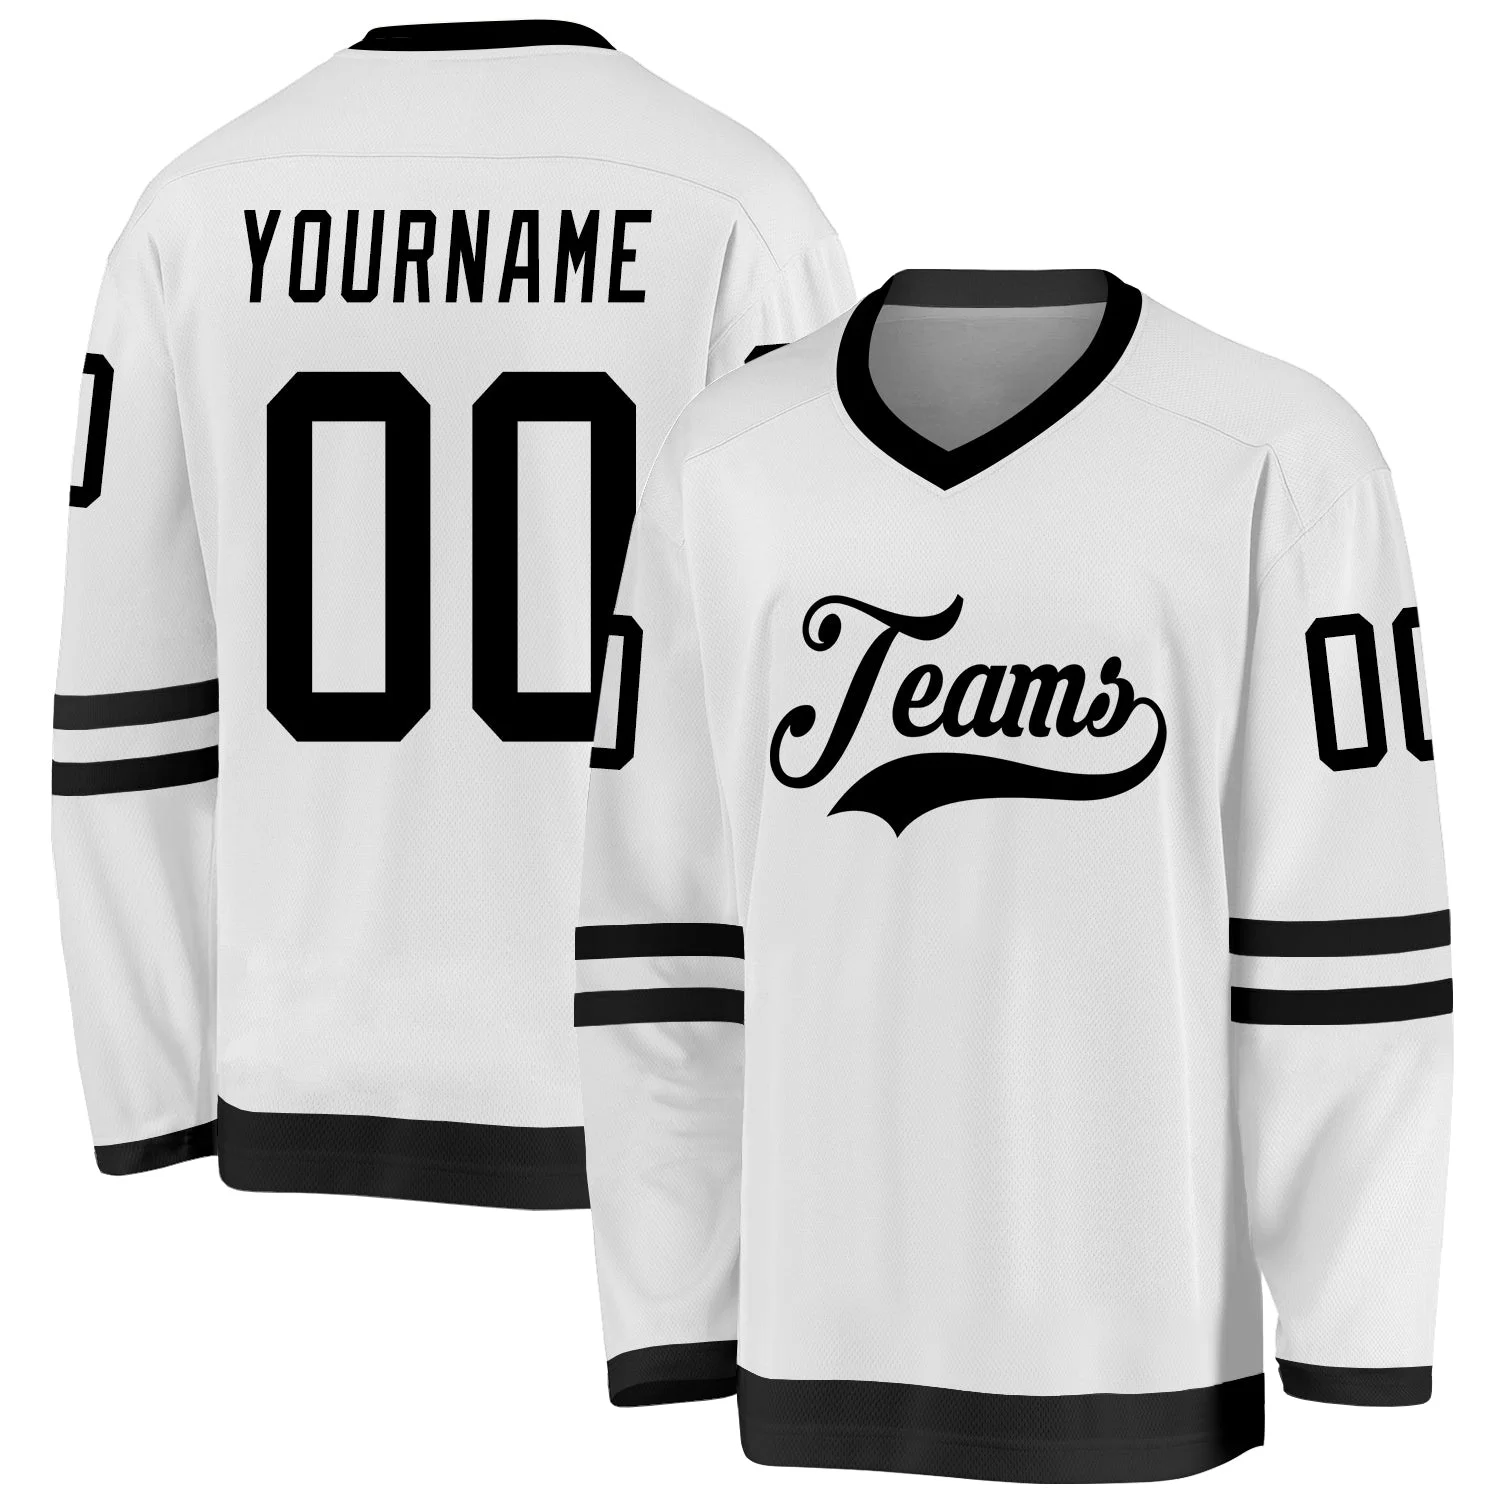 Stitched And Print White Black Hockey Jersey Custom